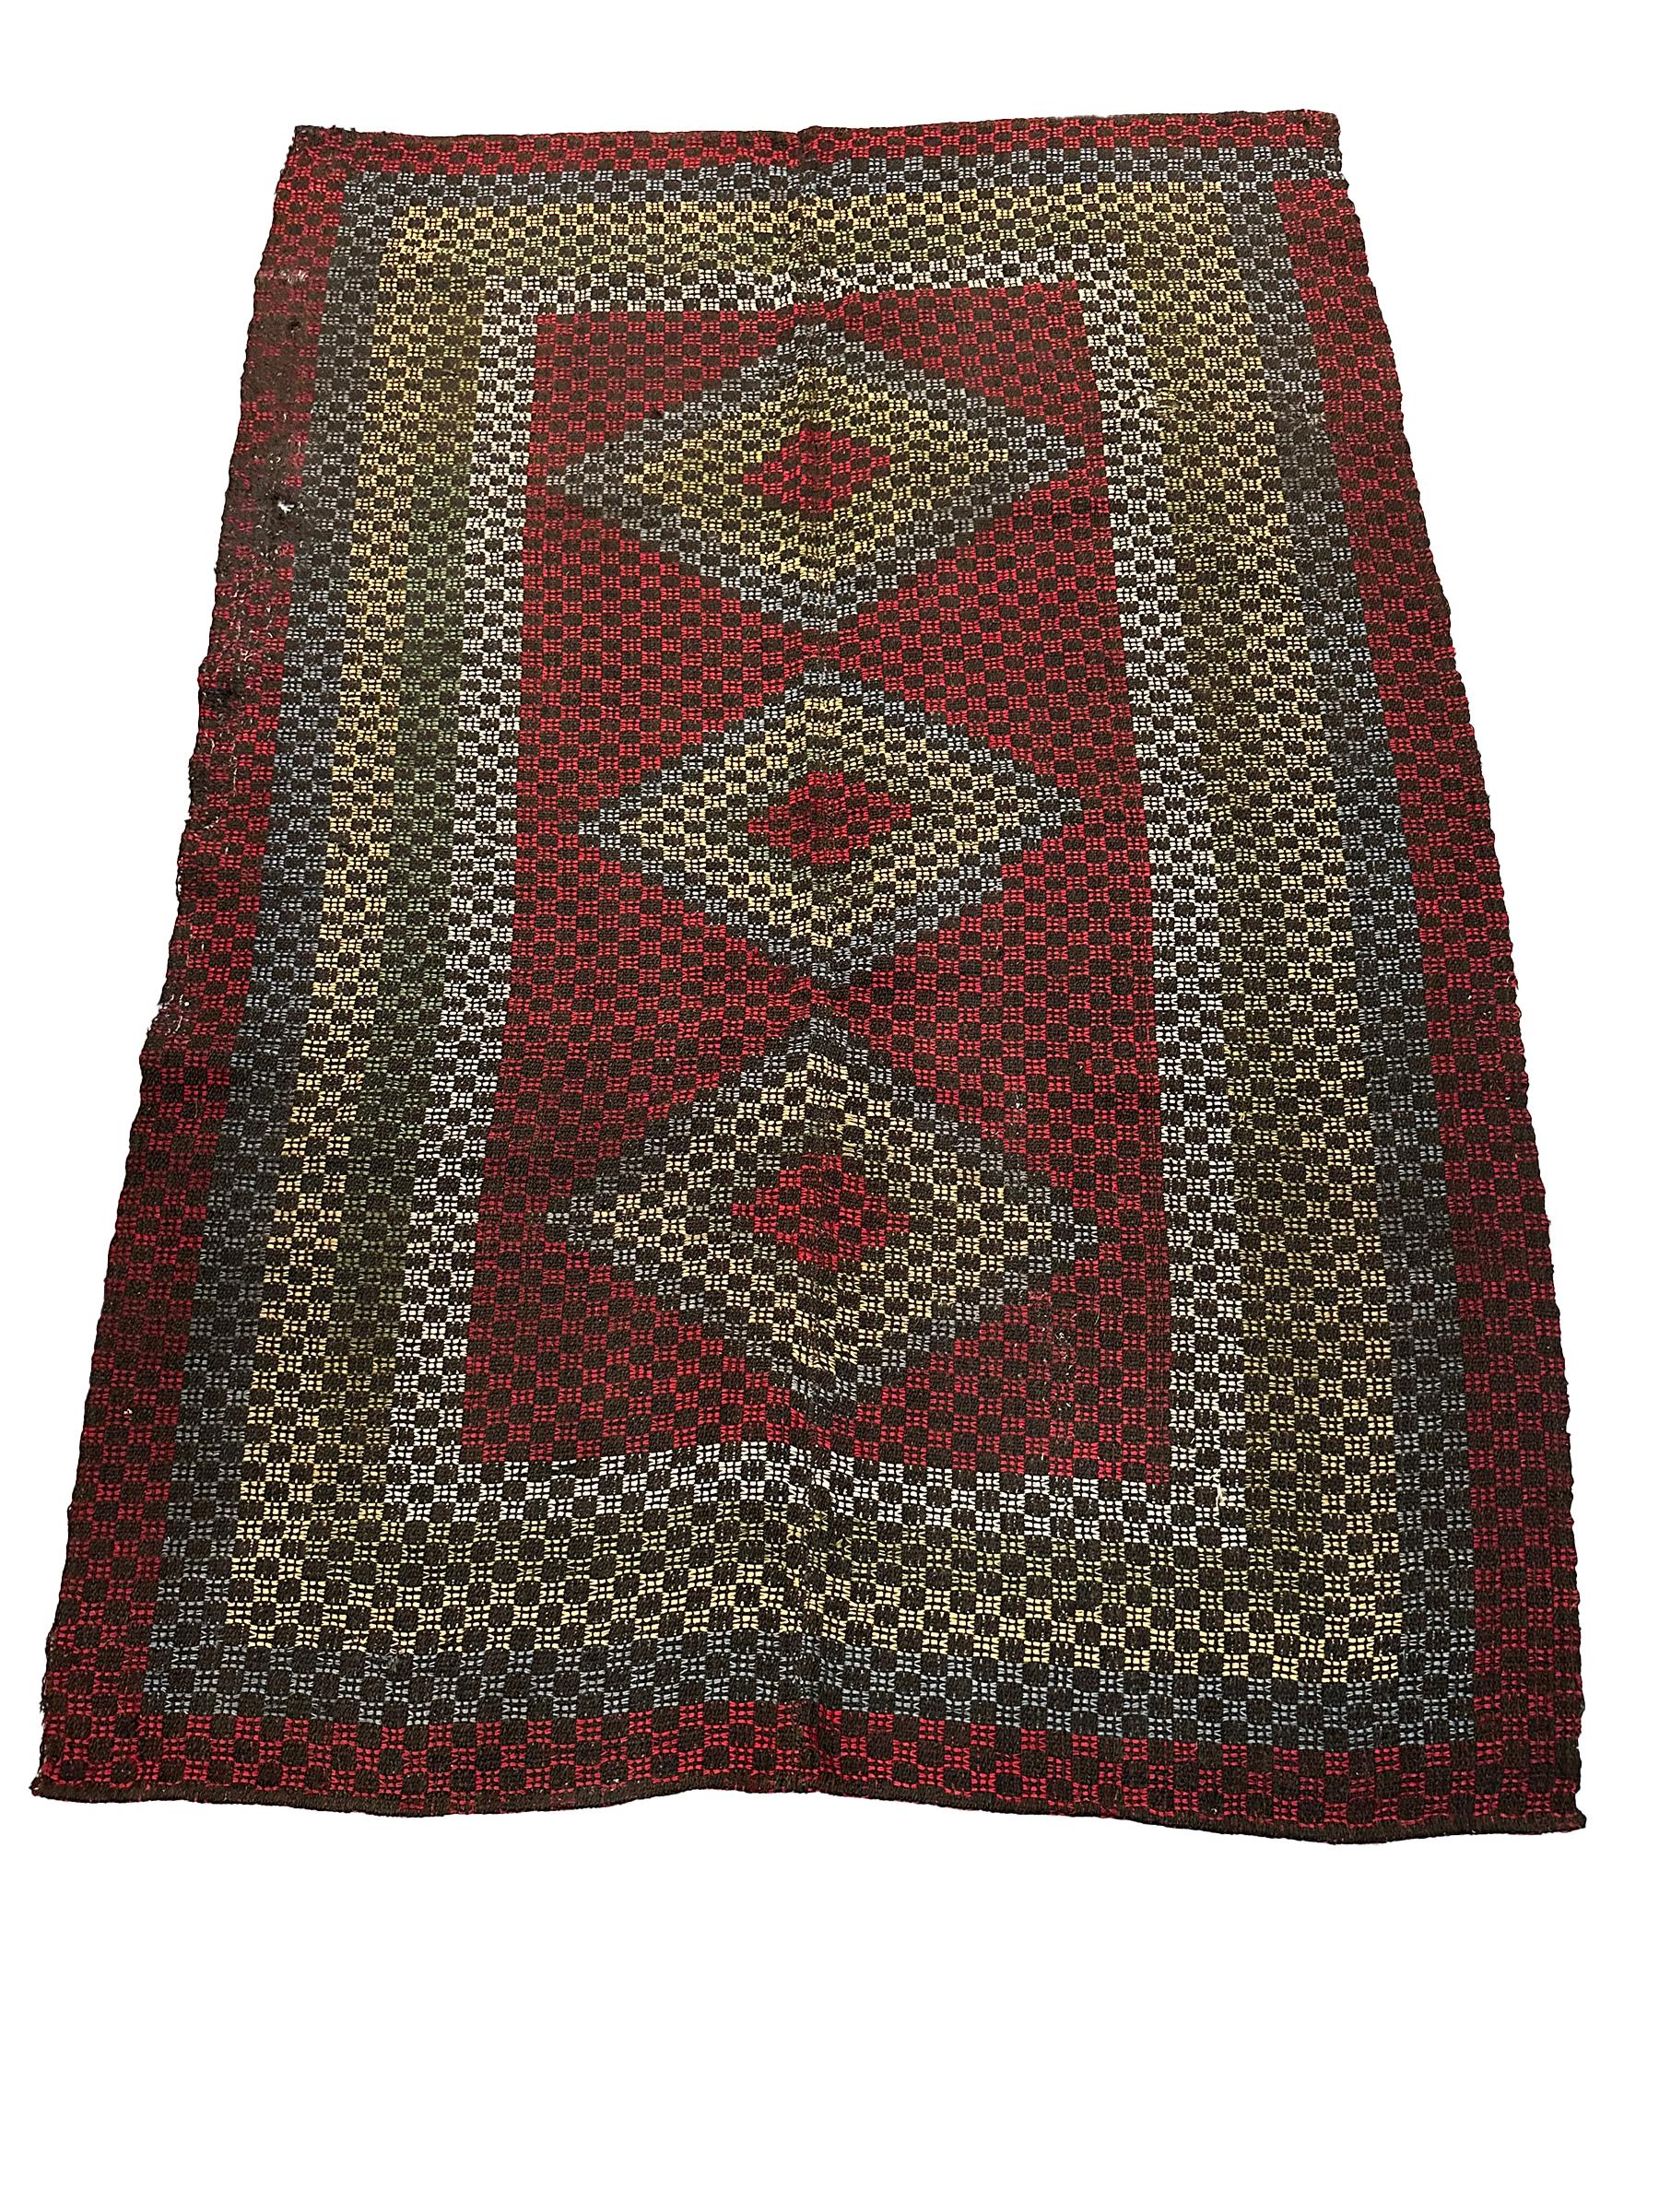 Scandinavian Antique Swedish Tapestry Geometric 4x6 130cm x 186cm For Sale